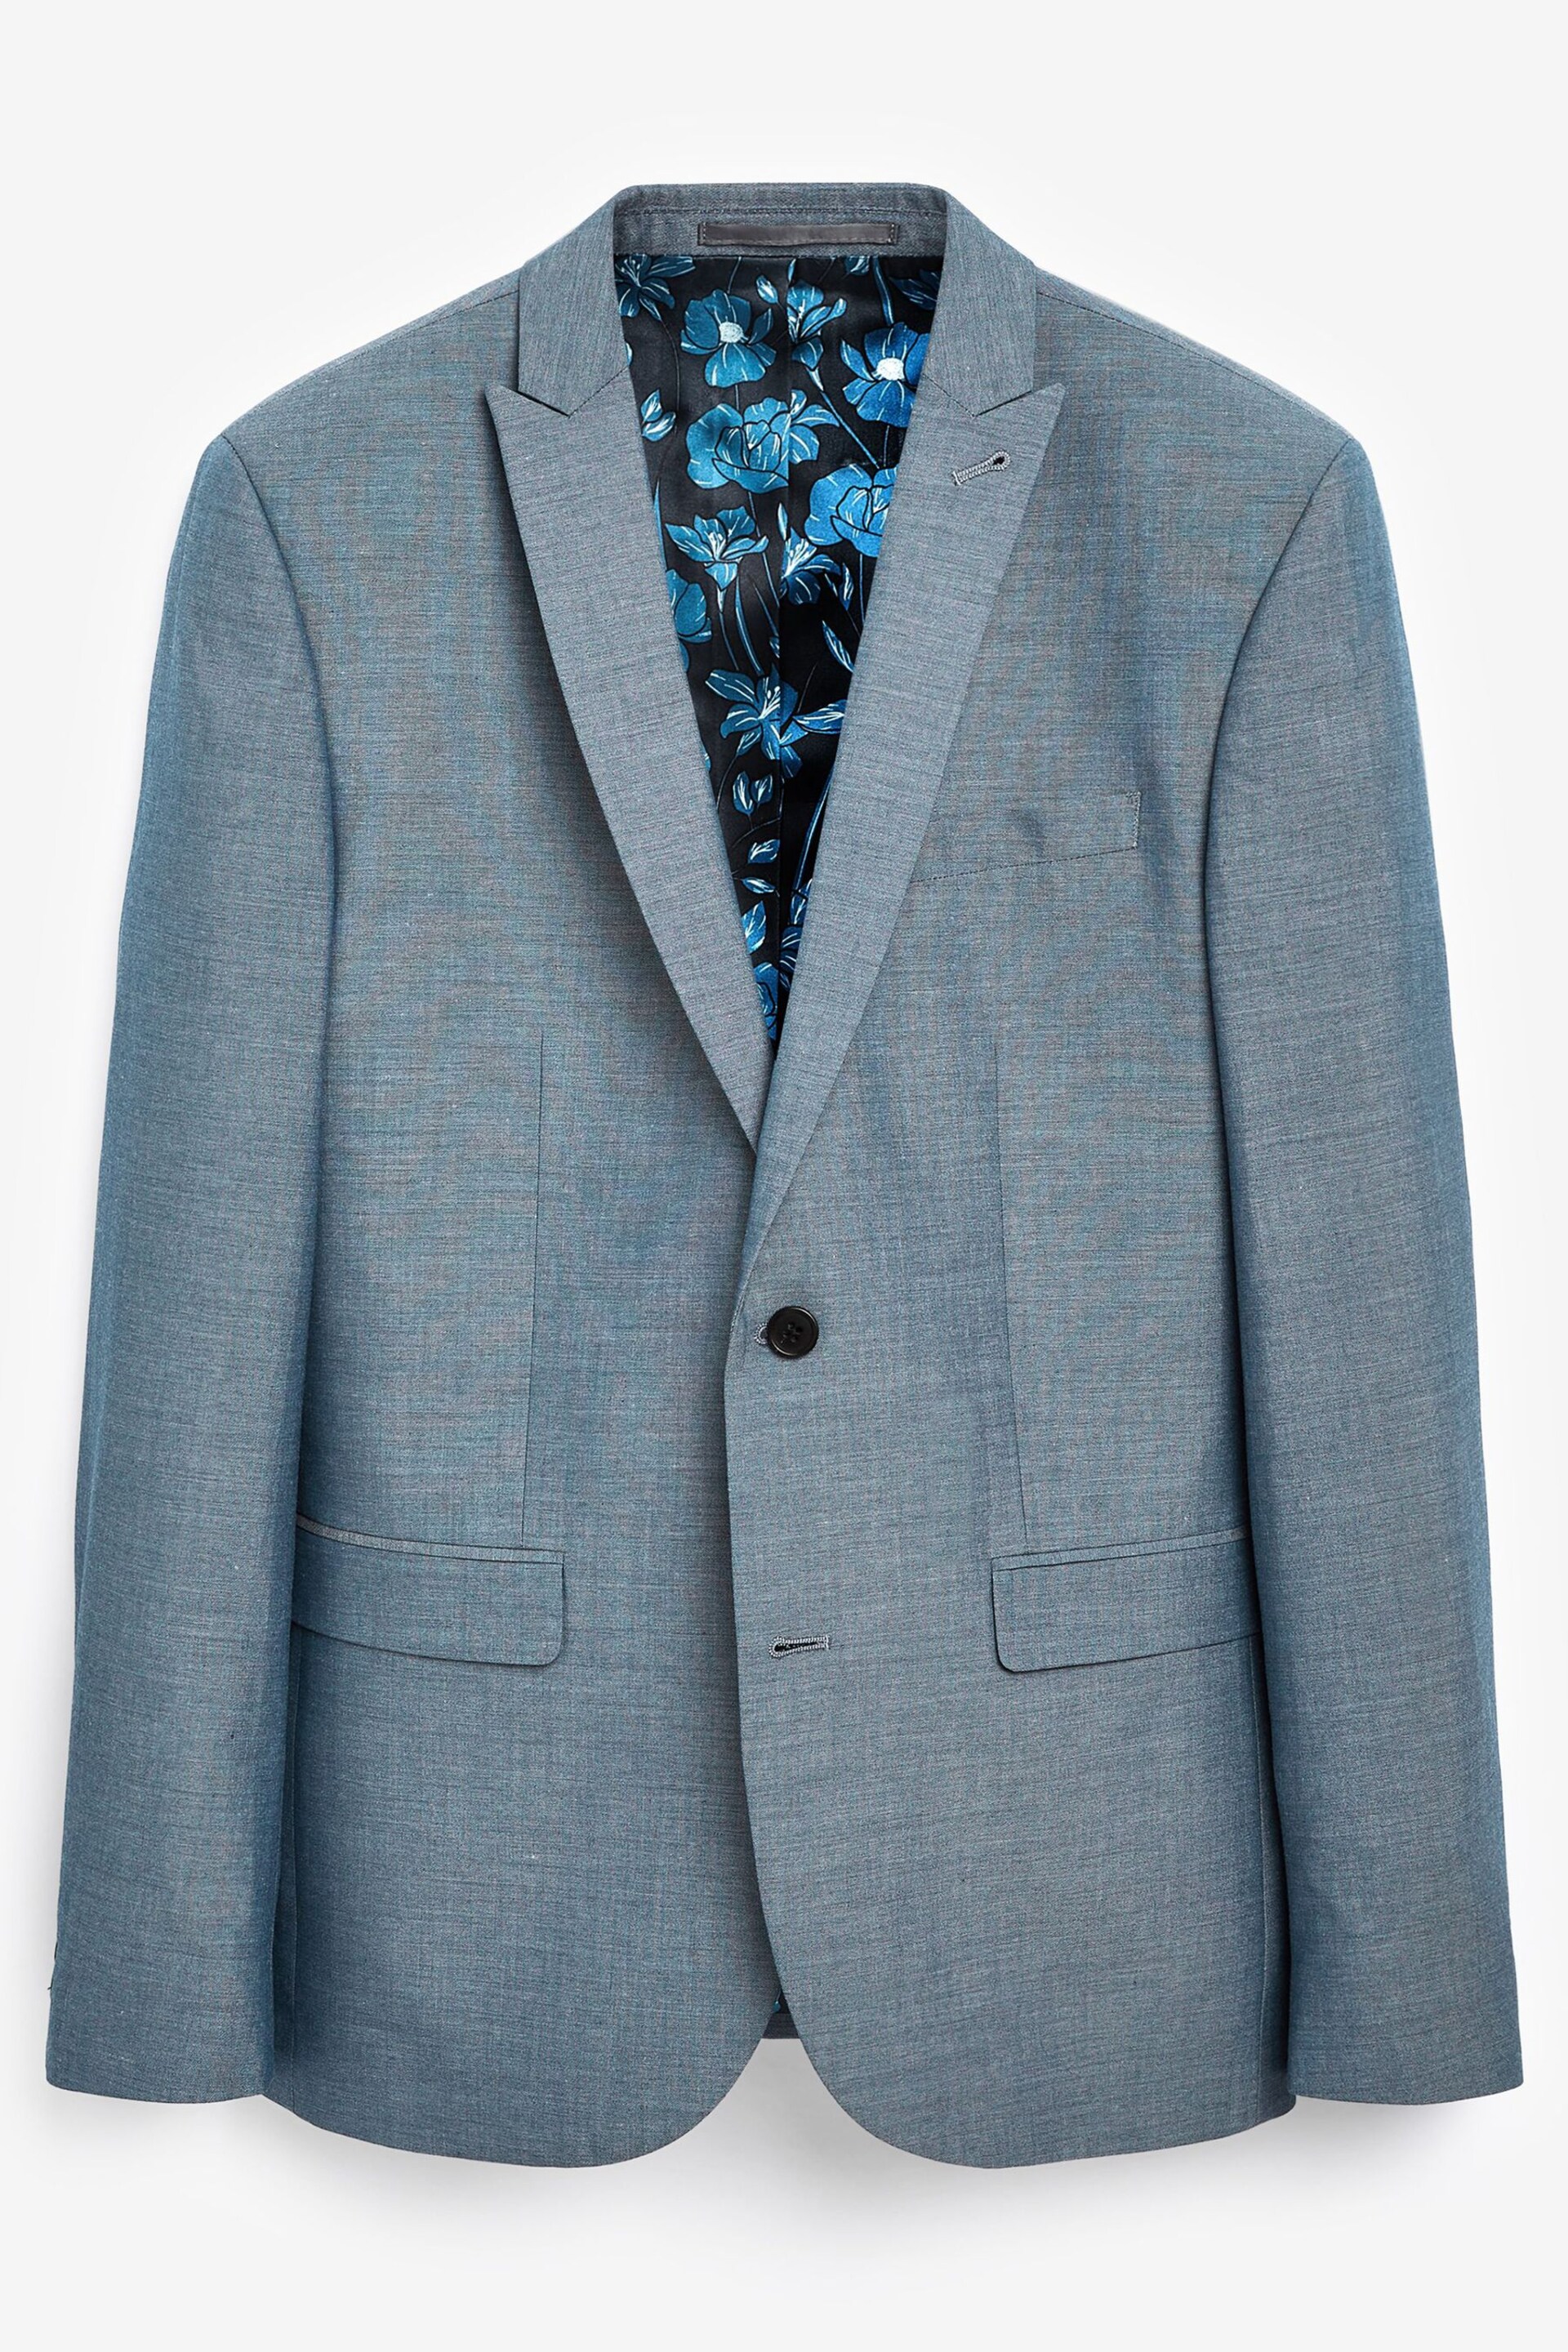 Light Blue Slim Two Button Suit Jacket - Image 7 of 9